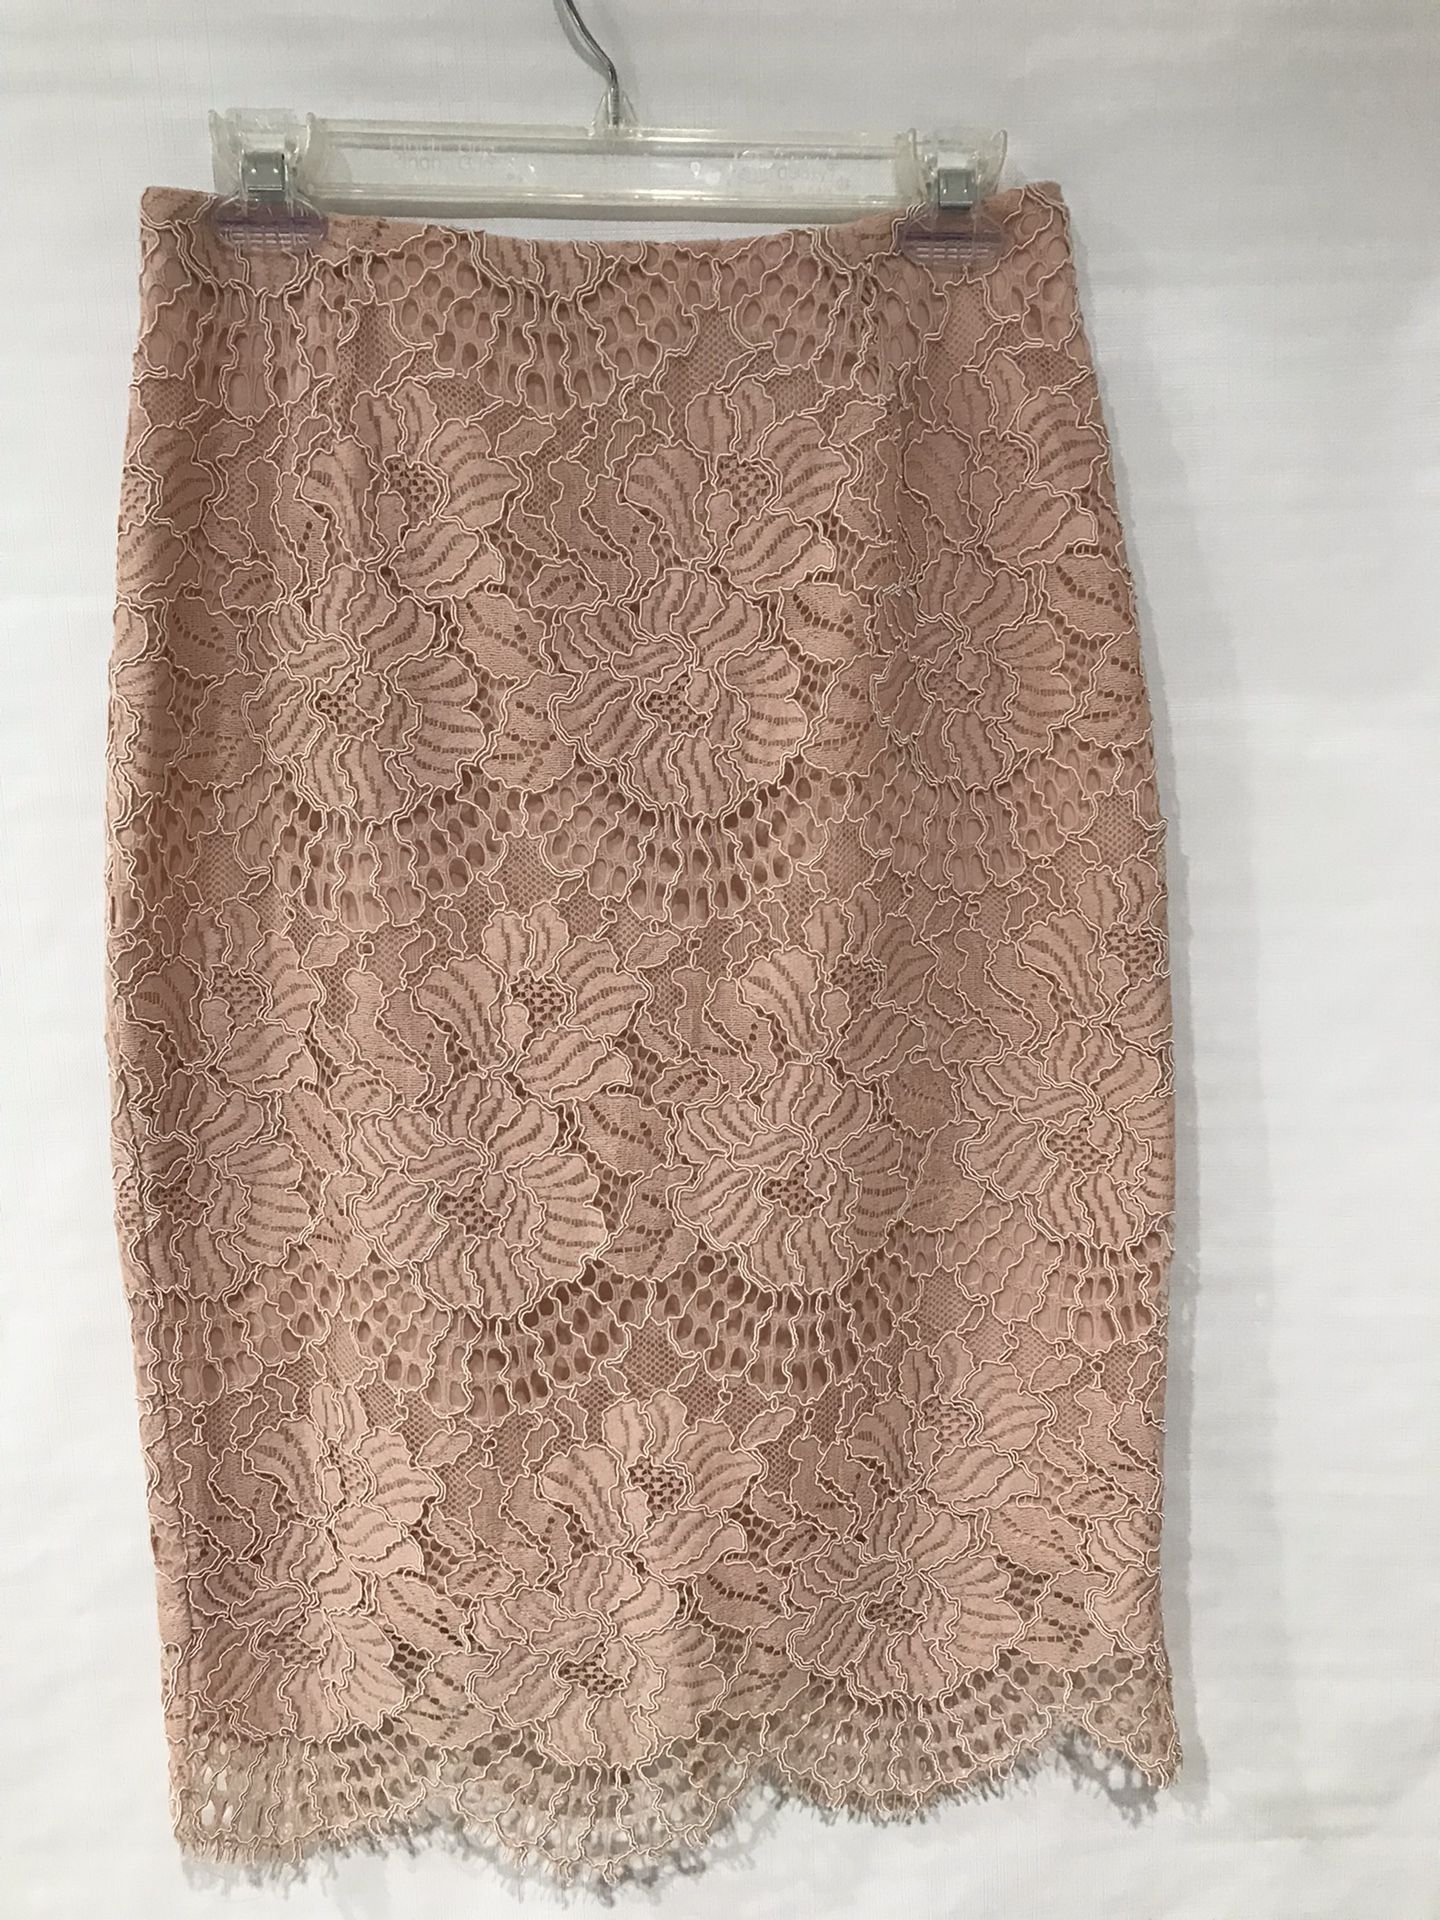 NWOT H&M Women’s Dust Rose Lined Lace Pencil Skirt, Size 6